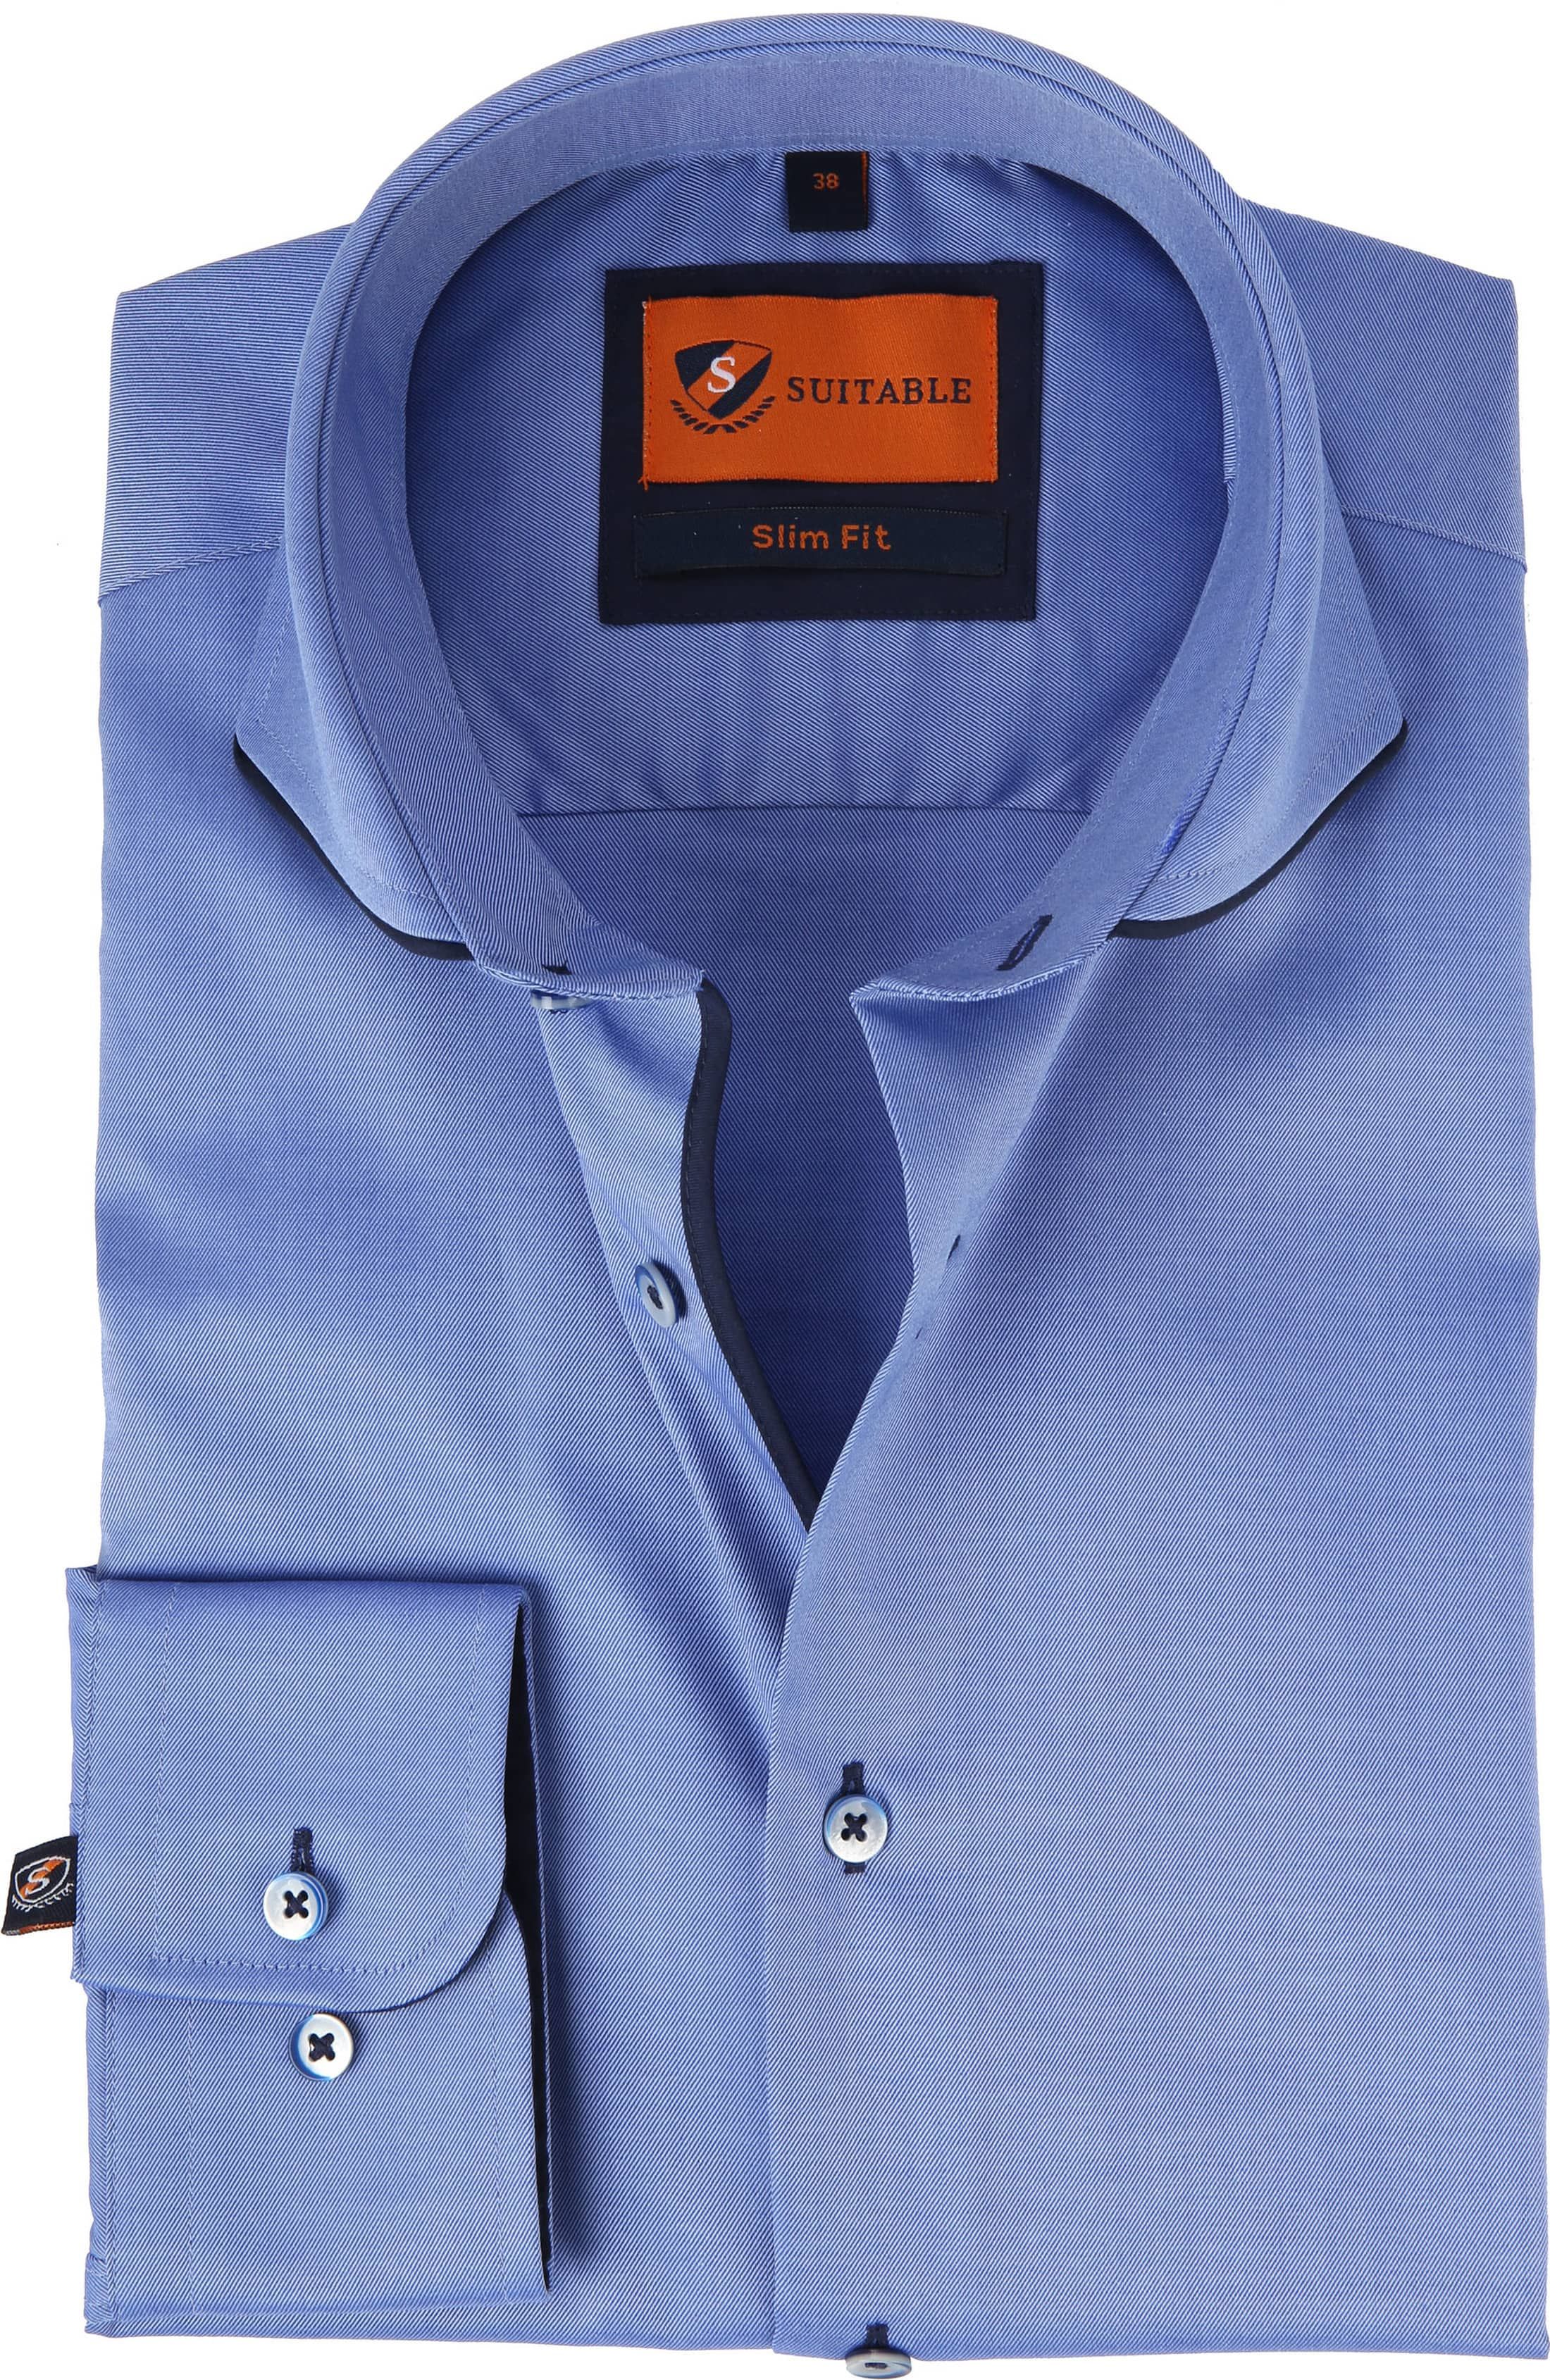 Suitable Shirt Indigo Blue size 15 3/4